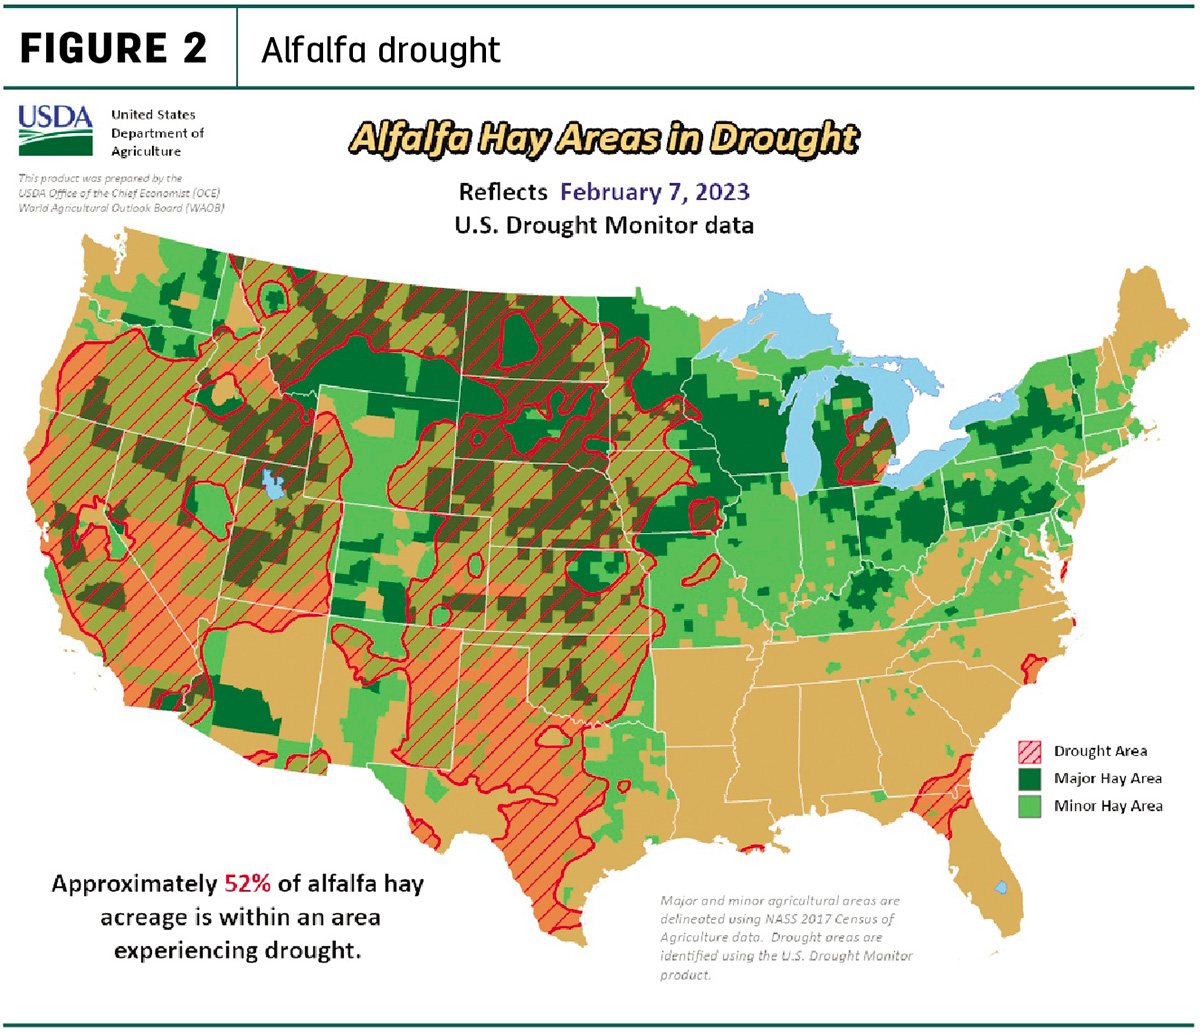 56972-natzke-alfalfa-drought-map-fg1.jpg